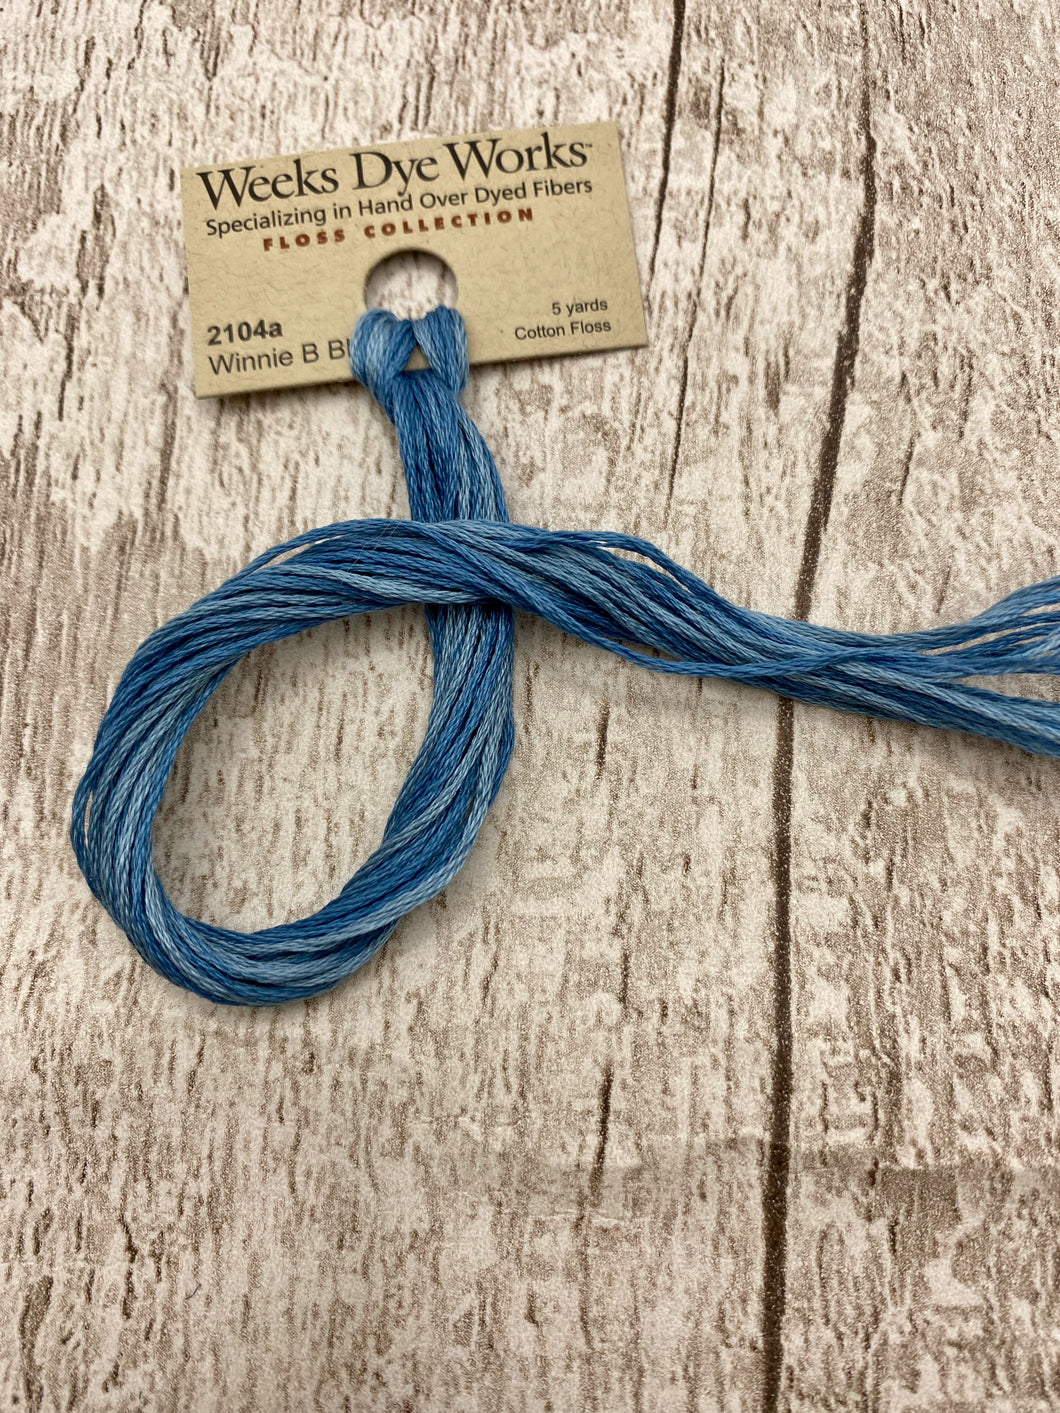 Winnie B. Blue (#2104a) Weeks Dye Works, 6-strand cotton floss